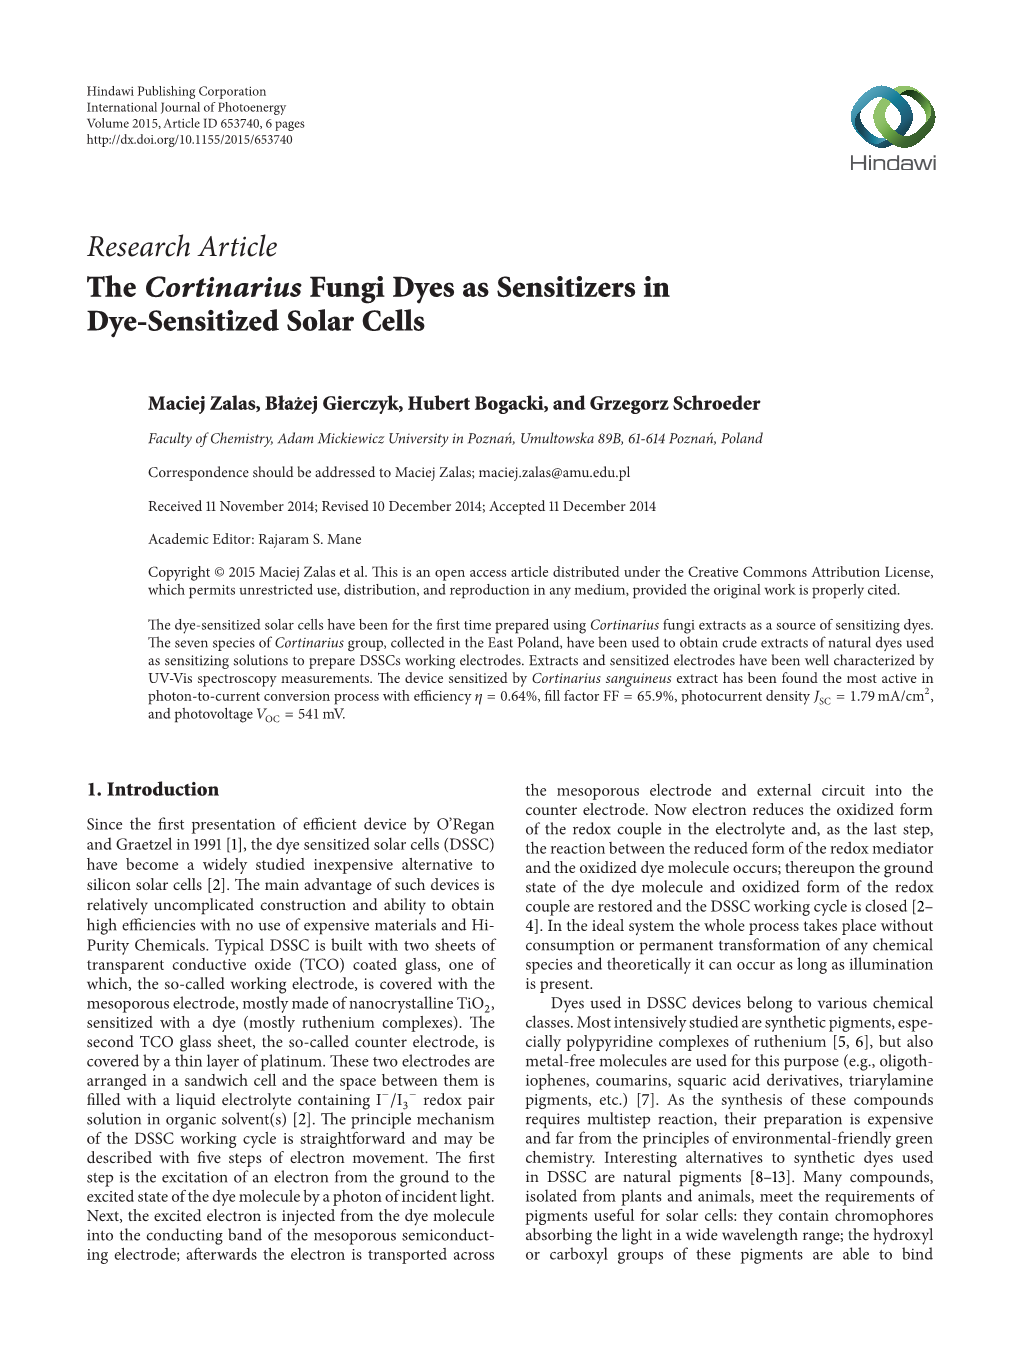 The Cortinarius Fungi Dyes As Sensitizers in Dye-Sensitized Solar Cells